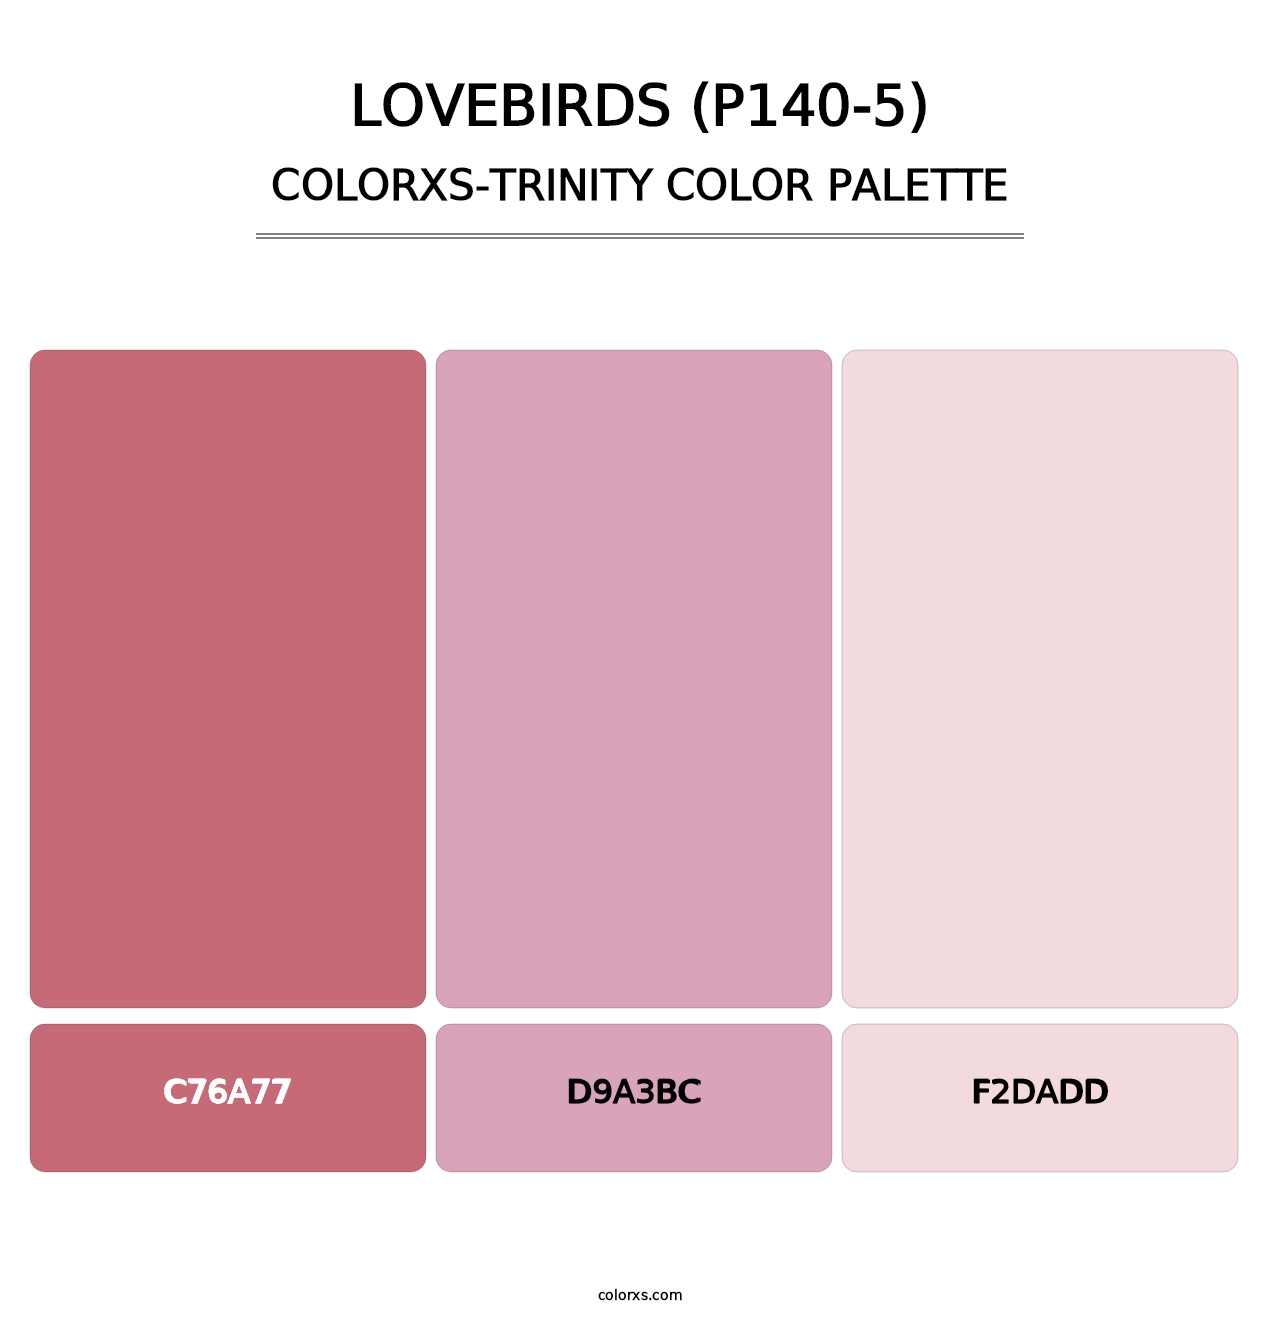 Lovebirds (P140-5) - Colorxs Trinity Palette